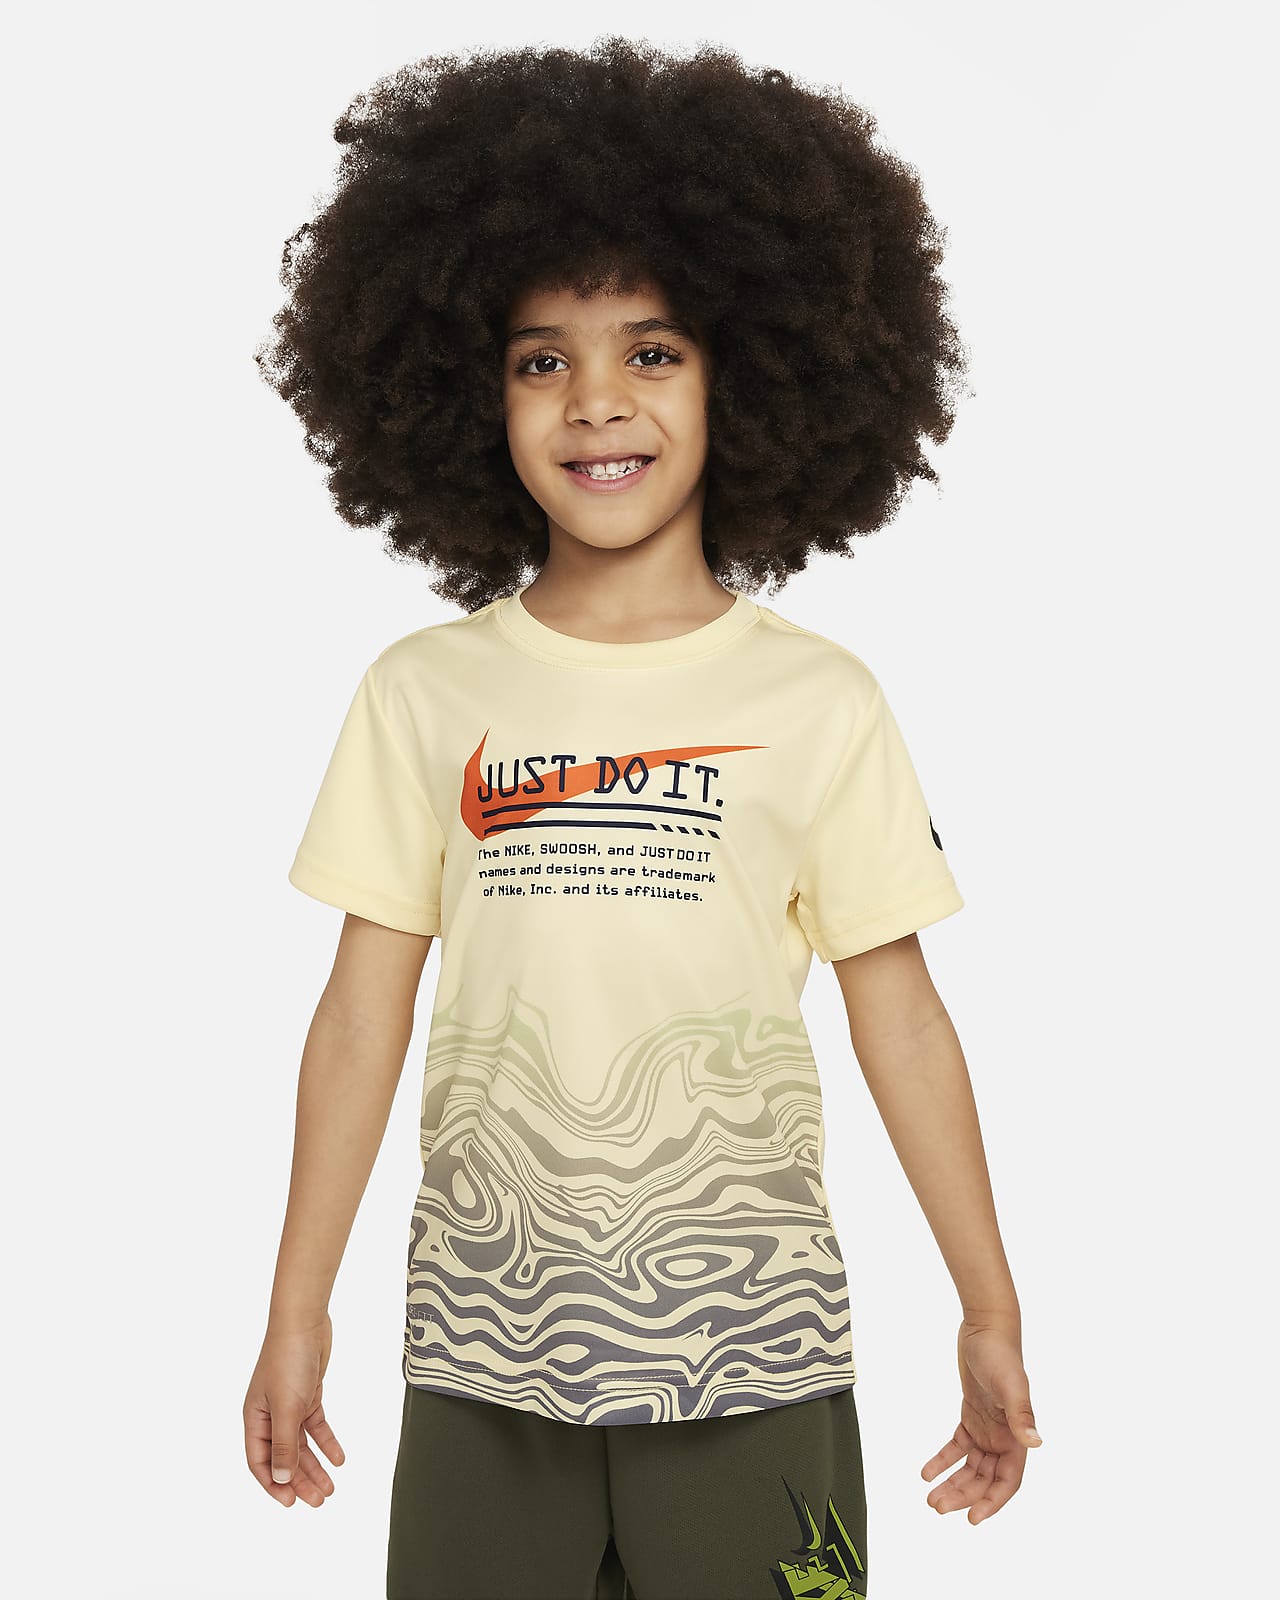 Nike Dri-FIT Little Kids' Graphic T-Shirt